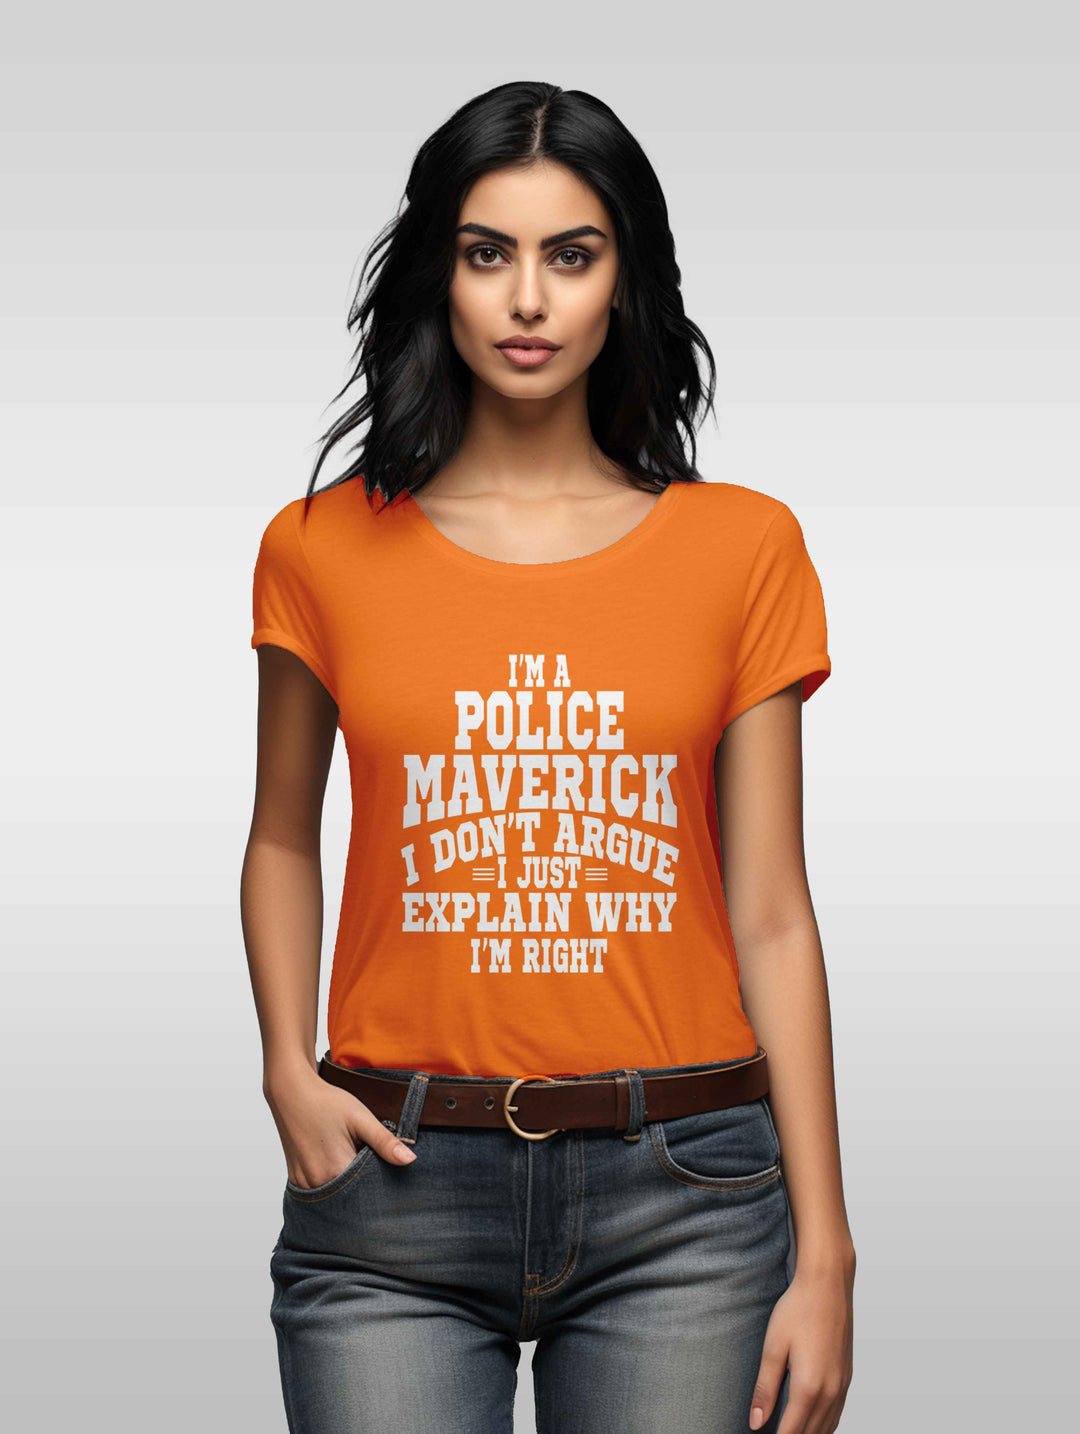 Women's Police Maverick